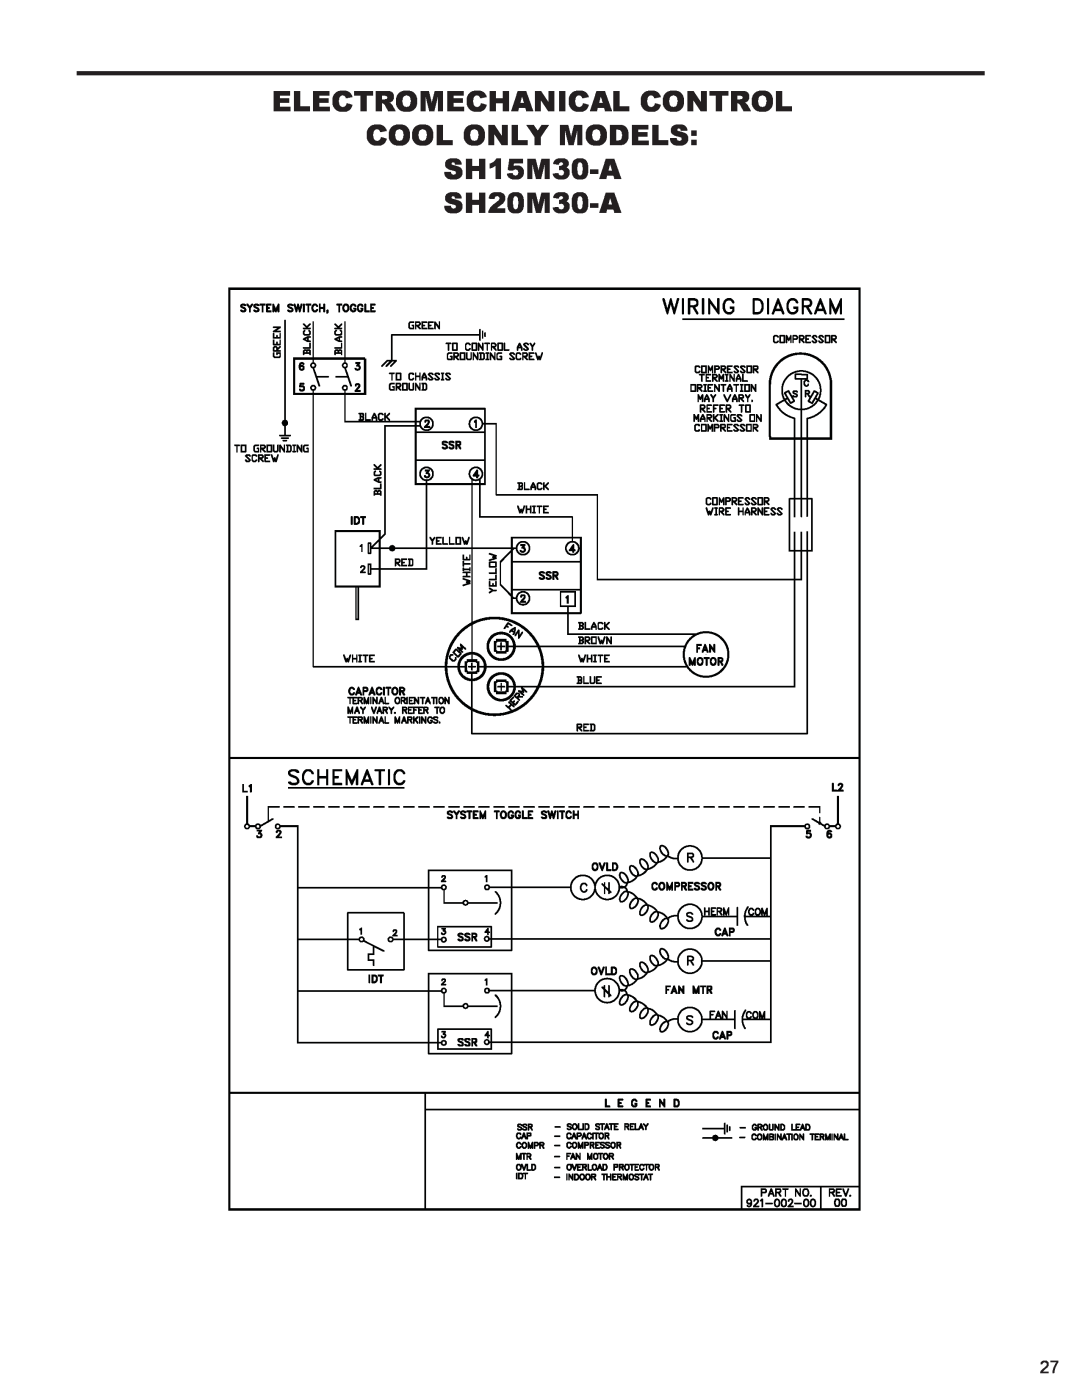 Friedrich R-410A service manual Electromechanical Control Cool Only Models, SH15M30-A SH20M30-A 